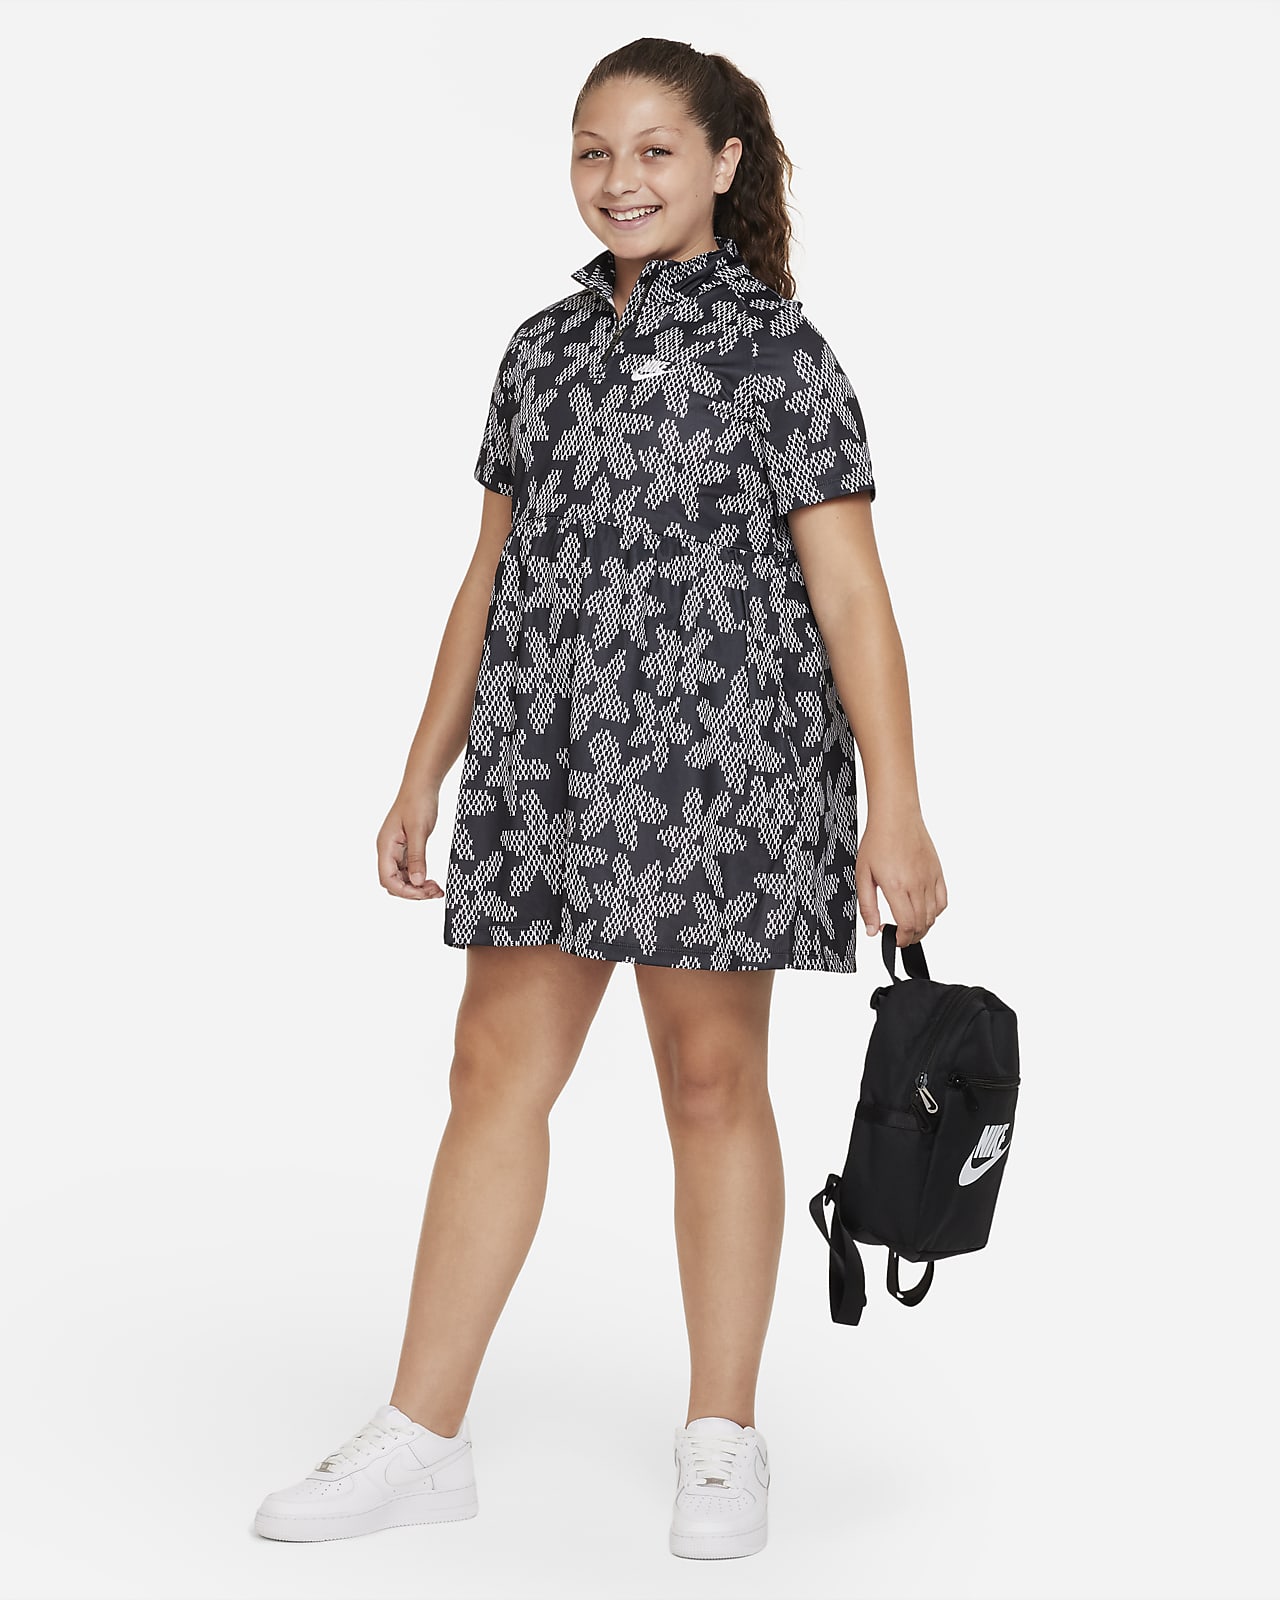 Vestido de manga corta con estampado para niña talla grande Nike Sportswear  (Talla amplia). 